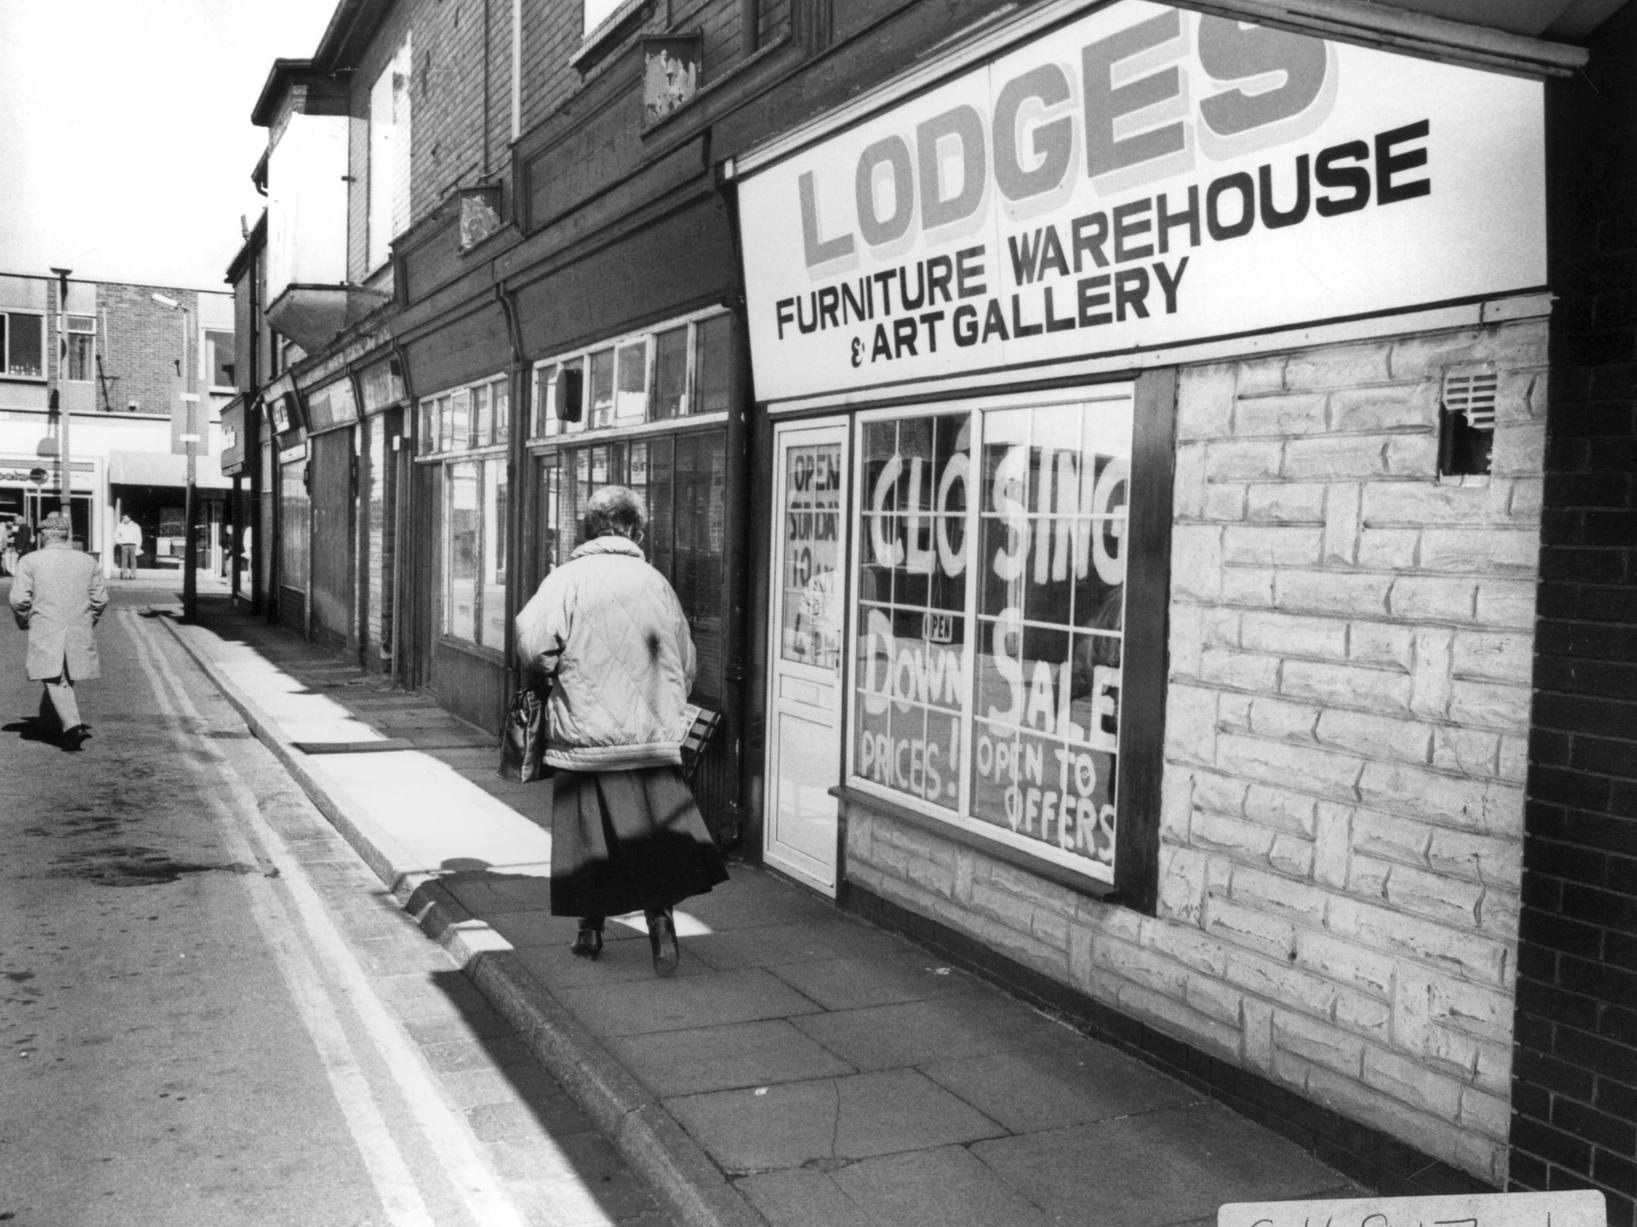 Sykes Street in Castleford, 1990